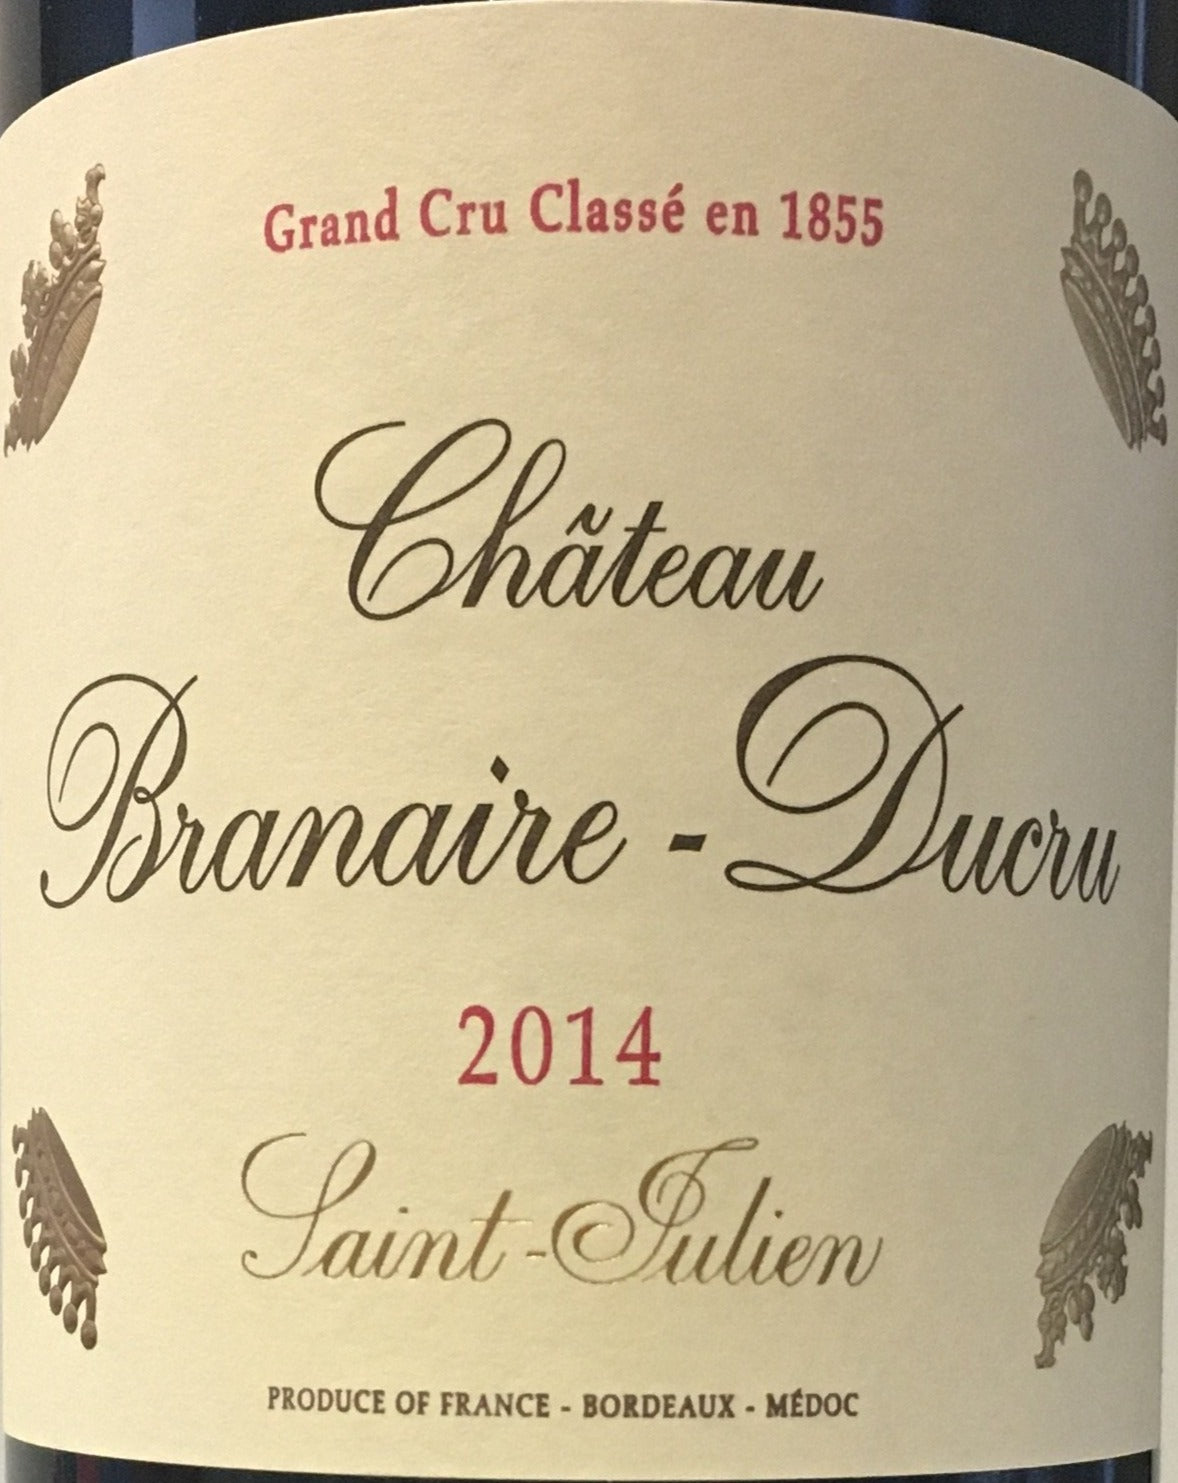 Chateau Branaire-Ducru - 2014